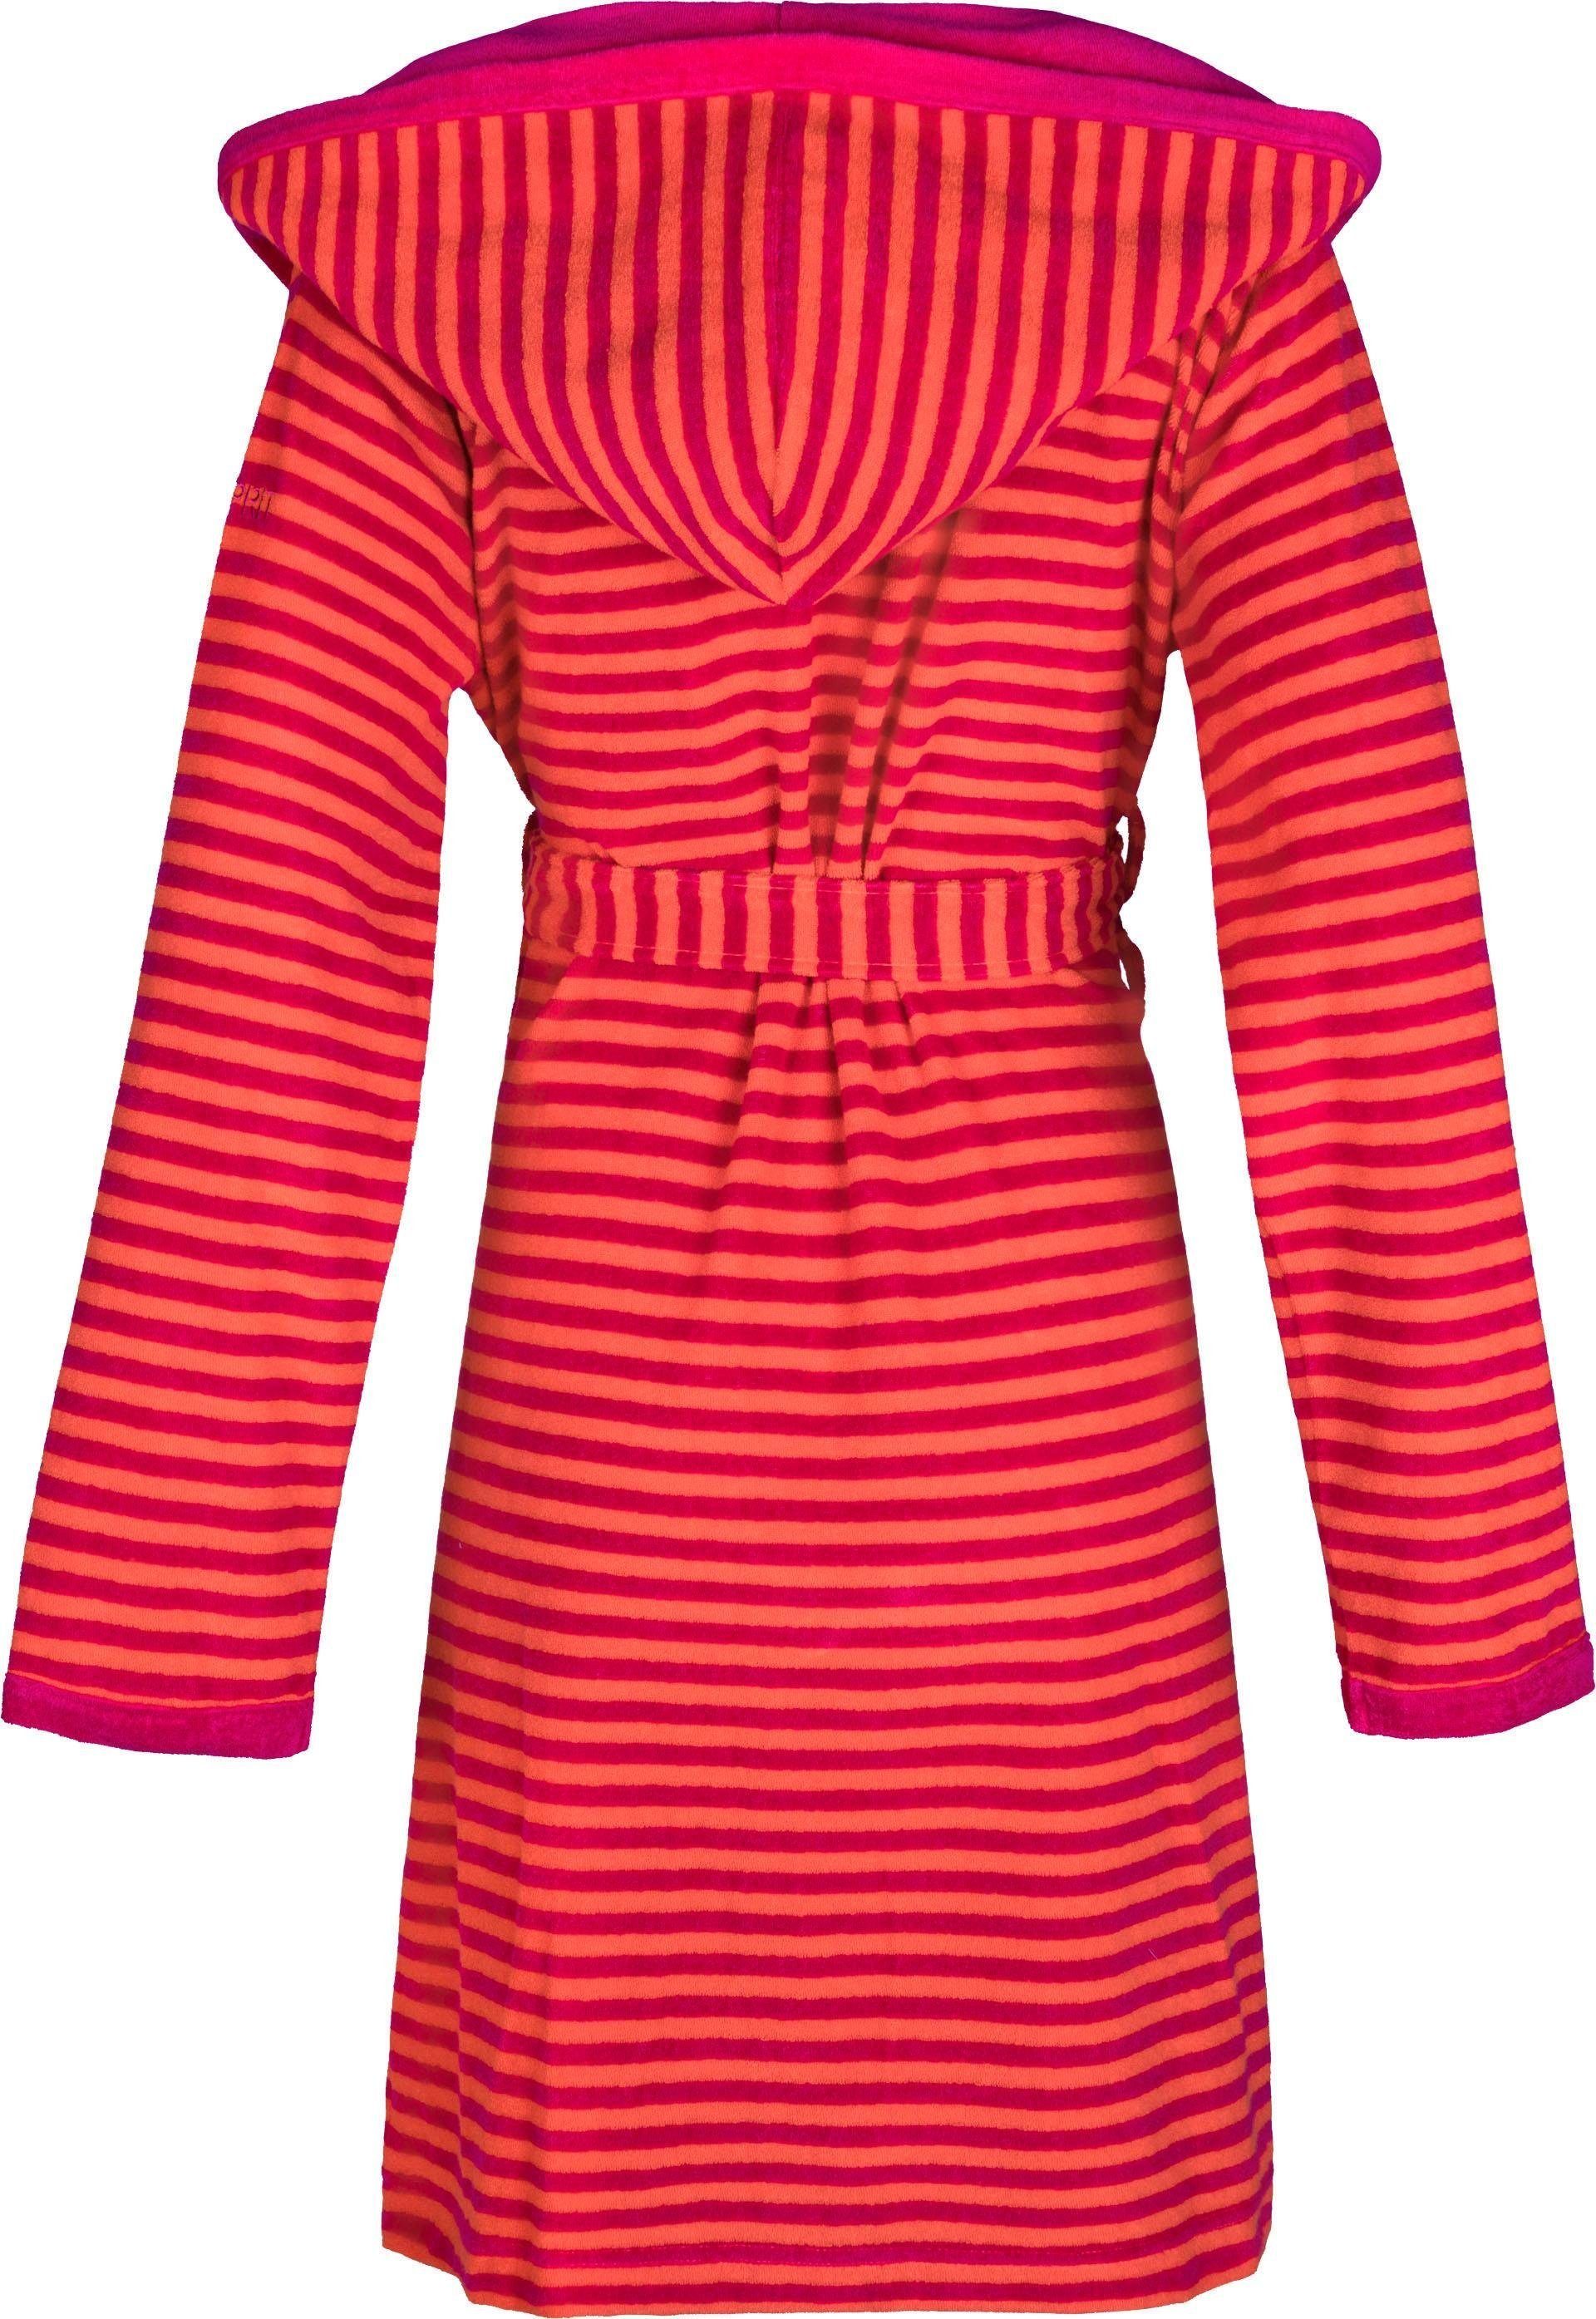 Esprit Damenbademantel Striped Hoody, Gürtel, gestreift Kurzform, raspberry Rundstrickware, mit Kapuze, Kapuze